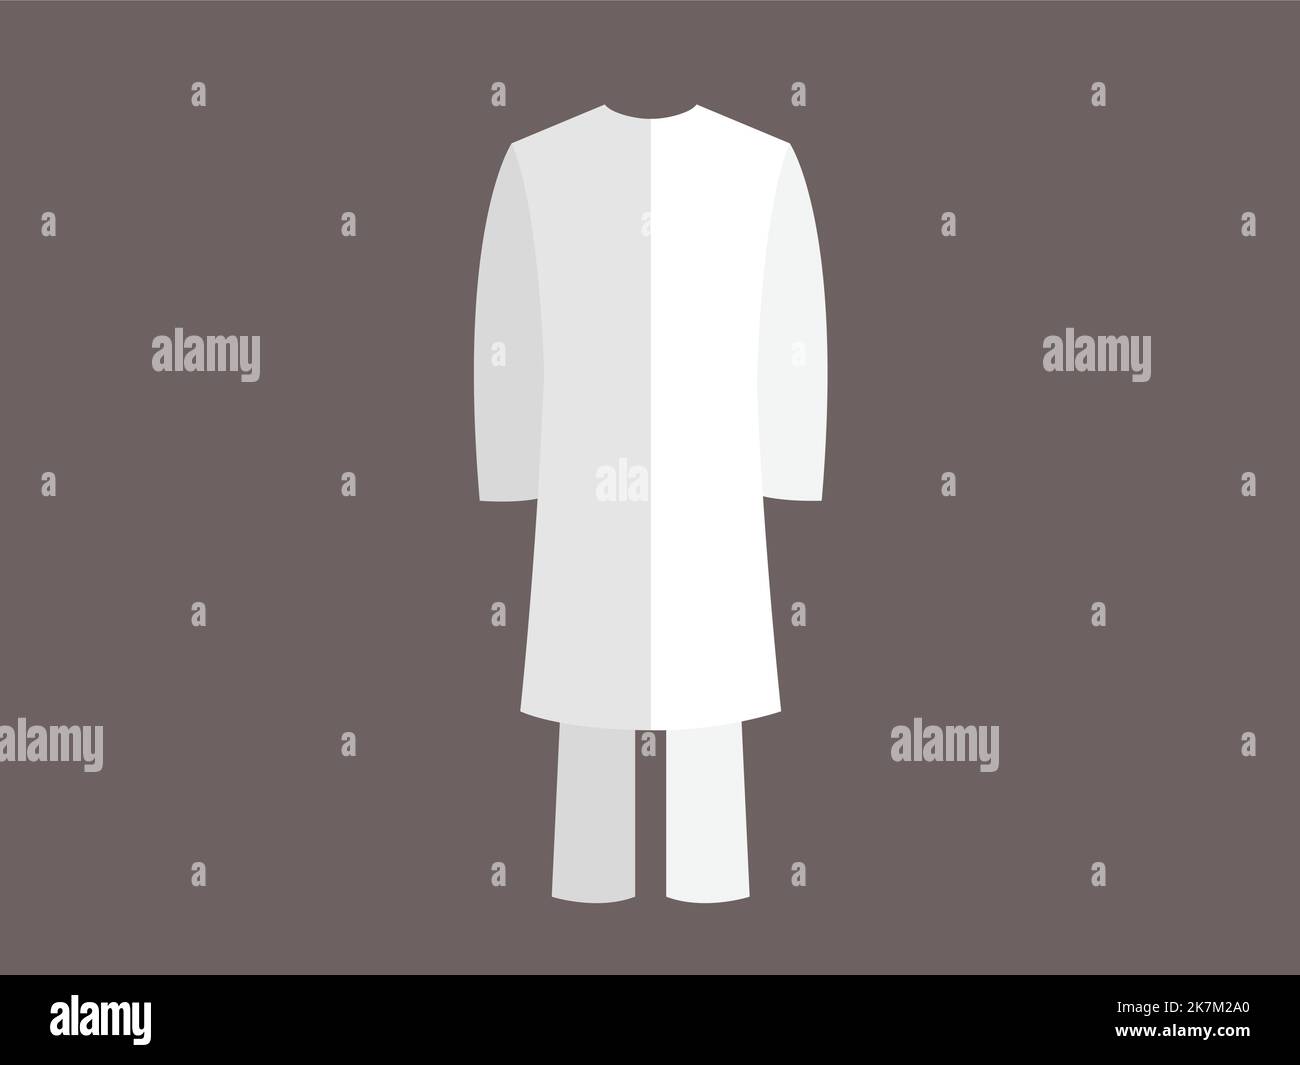 Saudi Arabia traditional white clothes illustration Stock Vector